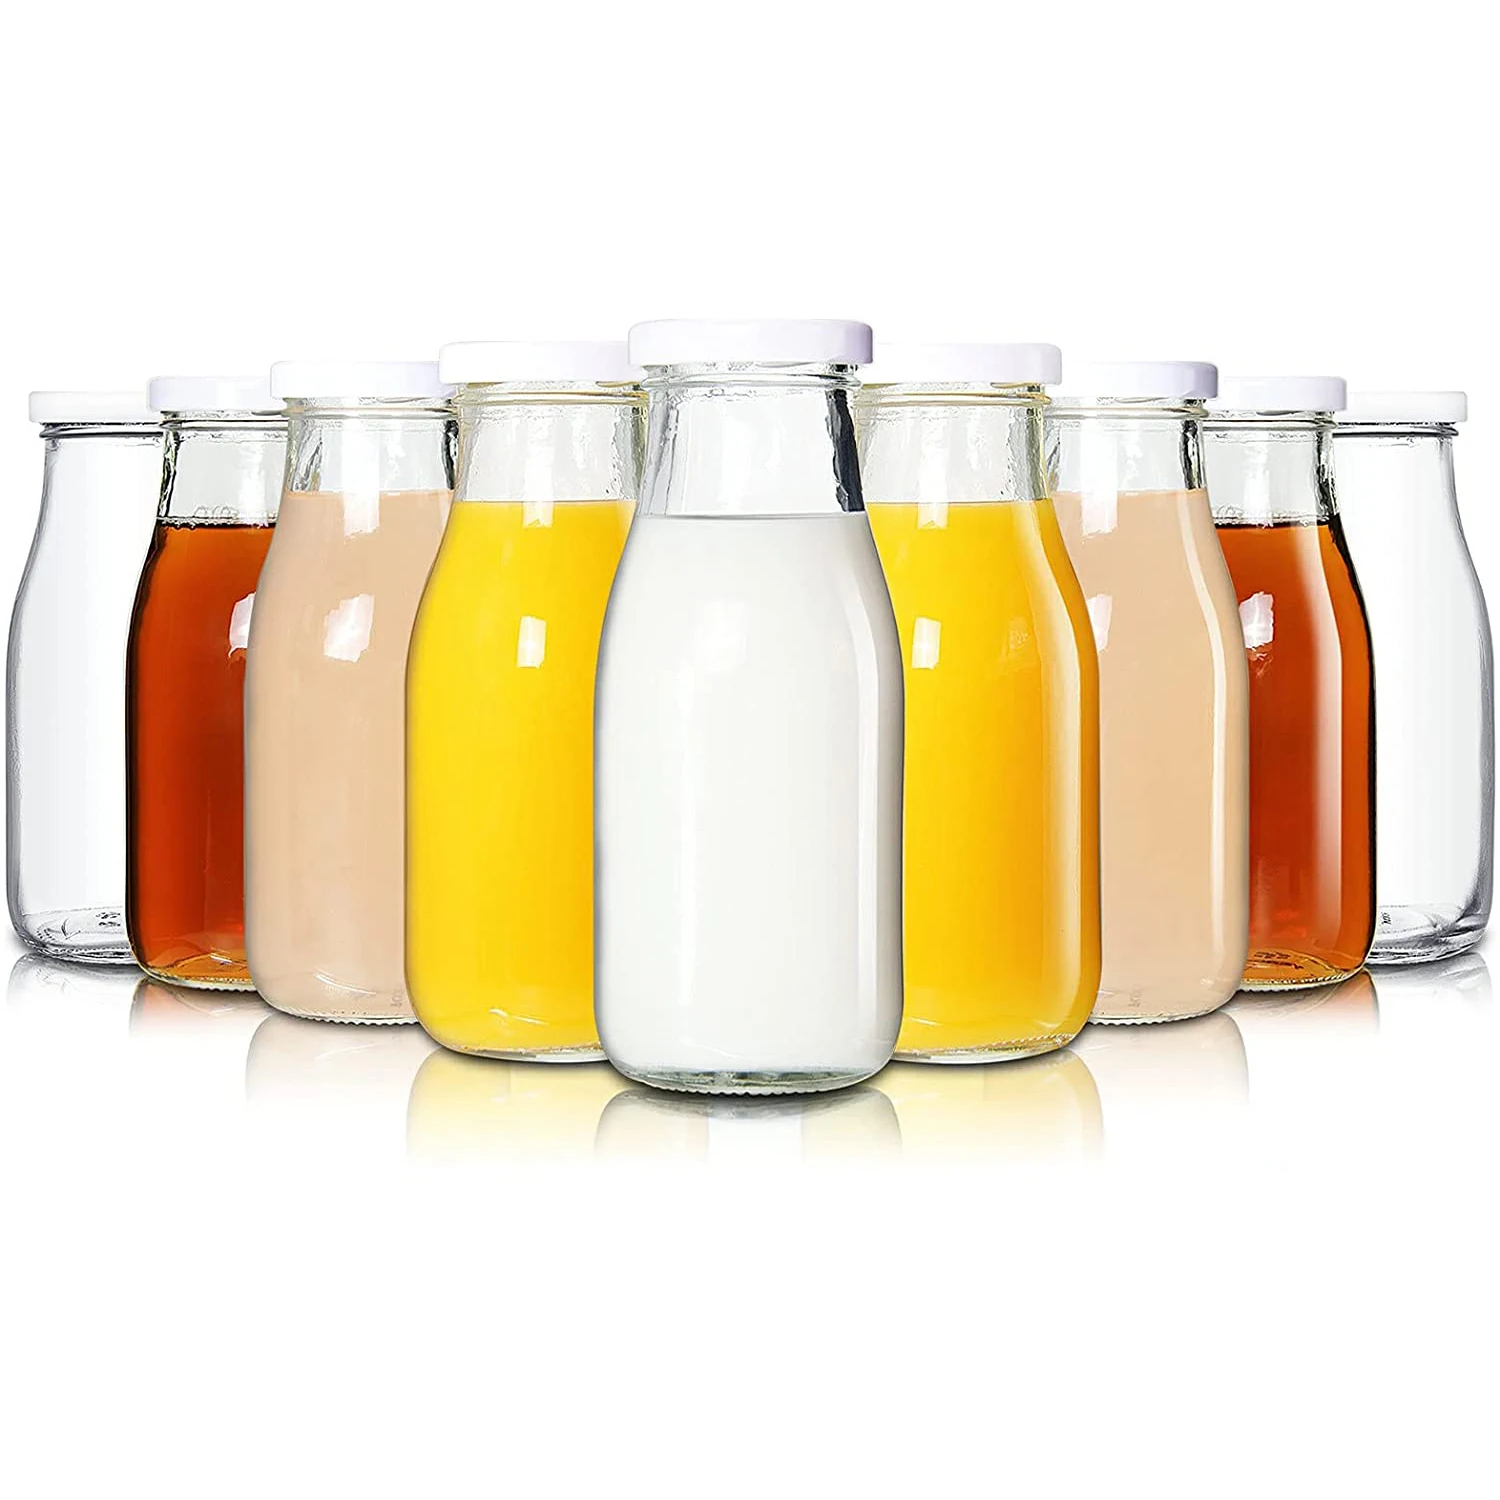 https://ae01.alicdn.com/kf/H59f4f41a3c894eb4908e0f3863acd113z/Glass-Milk-Bottles-with-Reusable-Metal-Twist-Lids-for-Beverage-Glassware-and-Drinkware-Parties-Weddings-BBQ.jpg